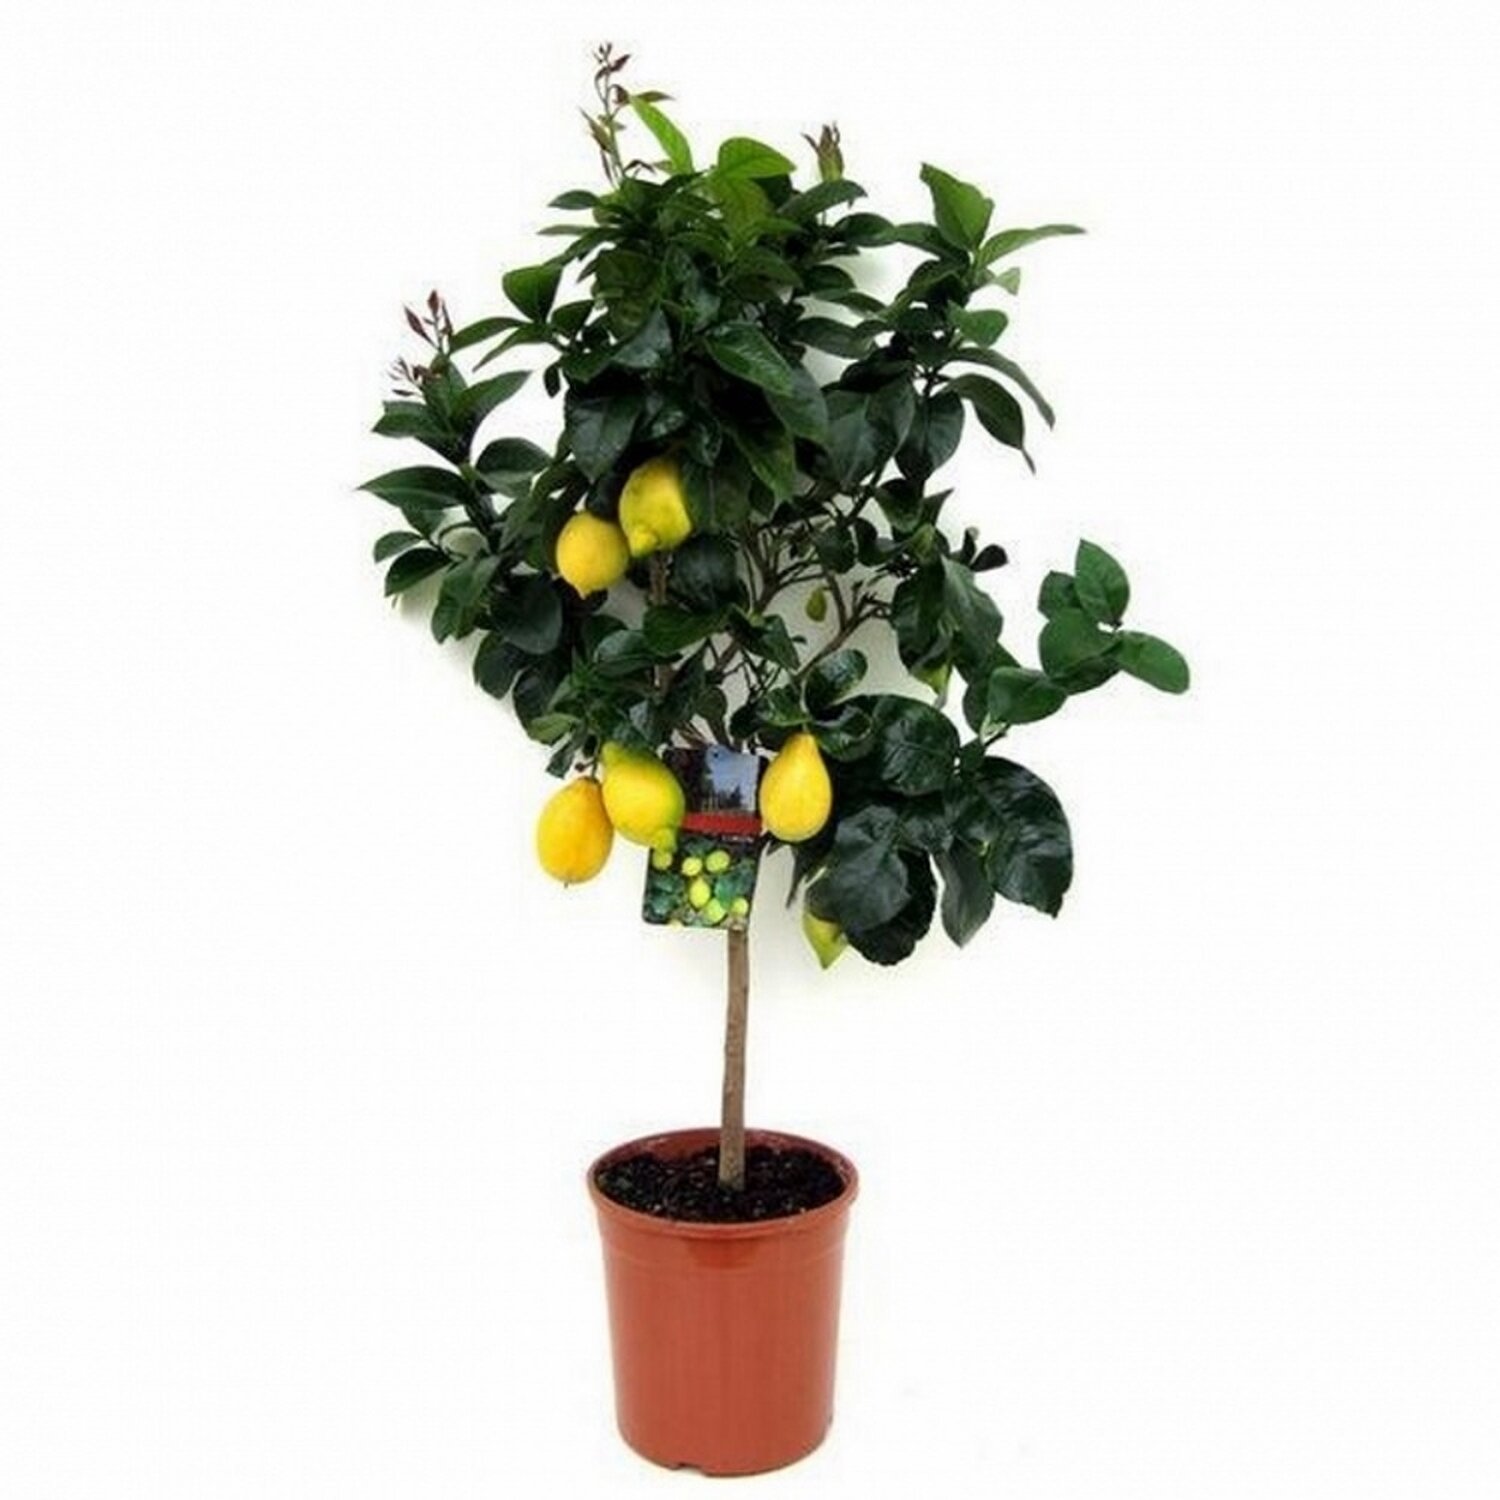 лимонное дерево фото в домашних